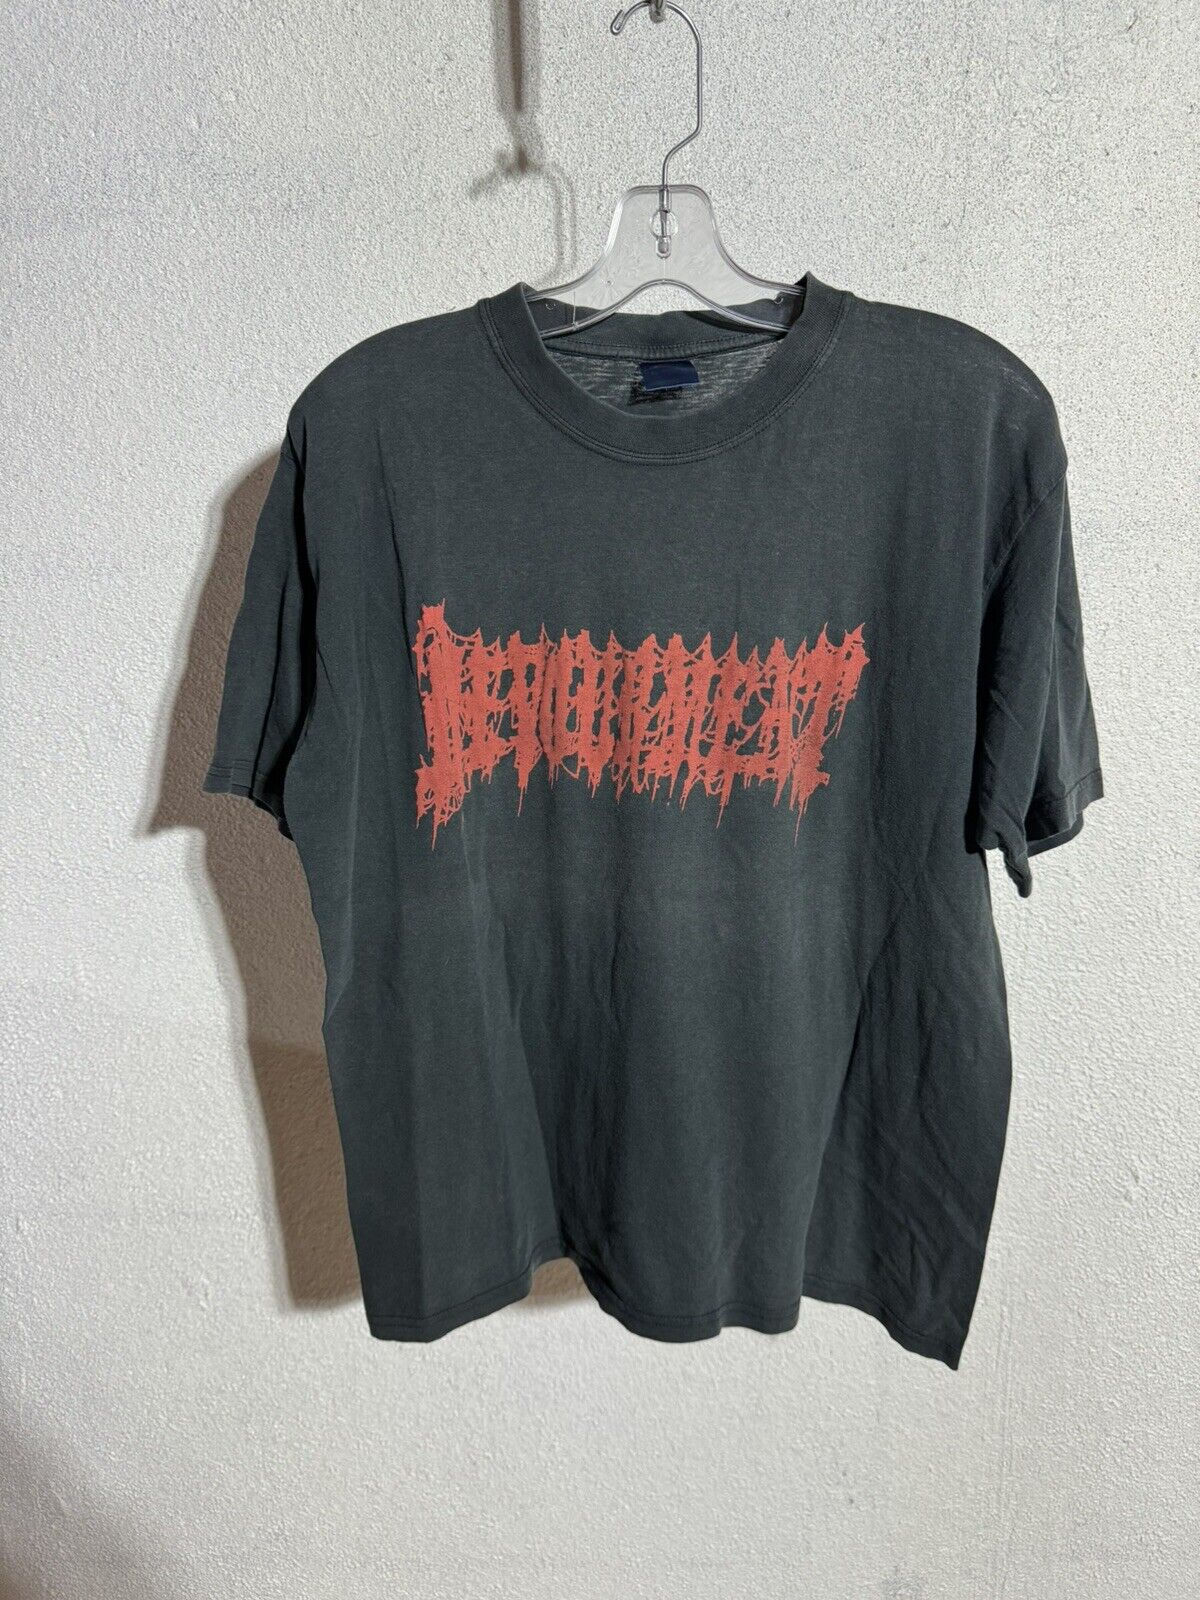 Vintage 90s Devourment Demo Era Double Sided T Shirt L Texas Death Metal TXDM